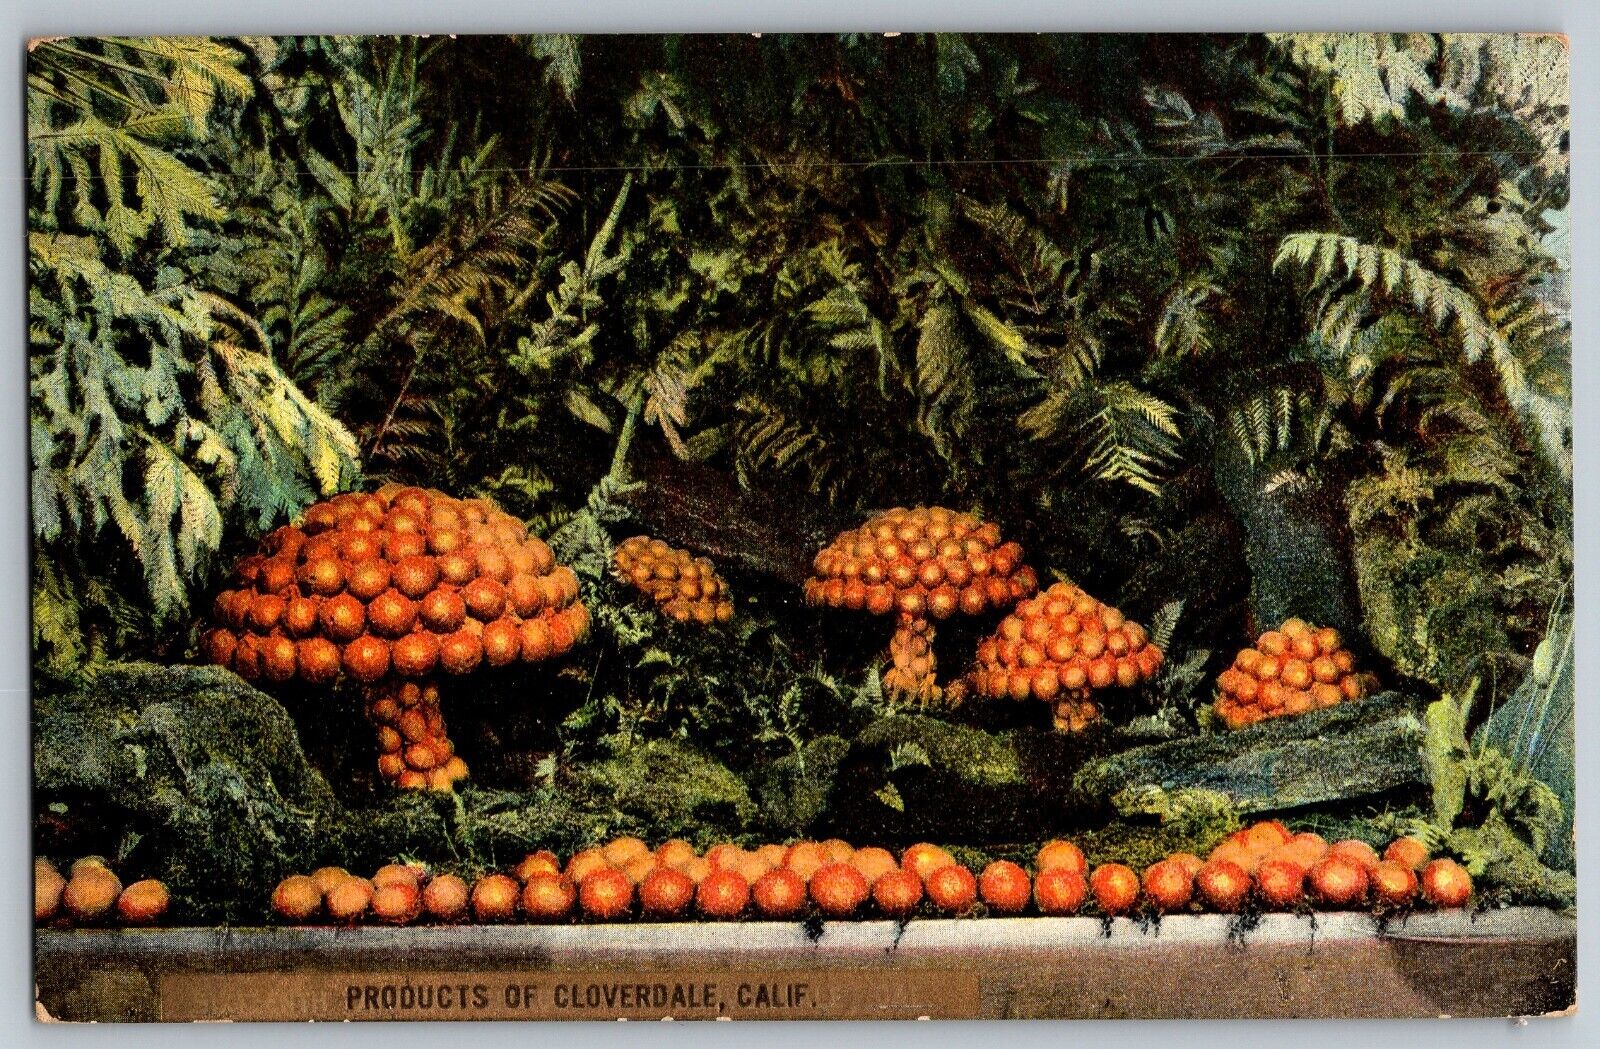 Cloverdale, California - Oranges - Product of Cloverdale - Vintage Postcard